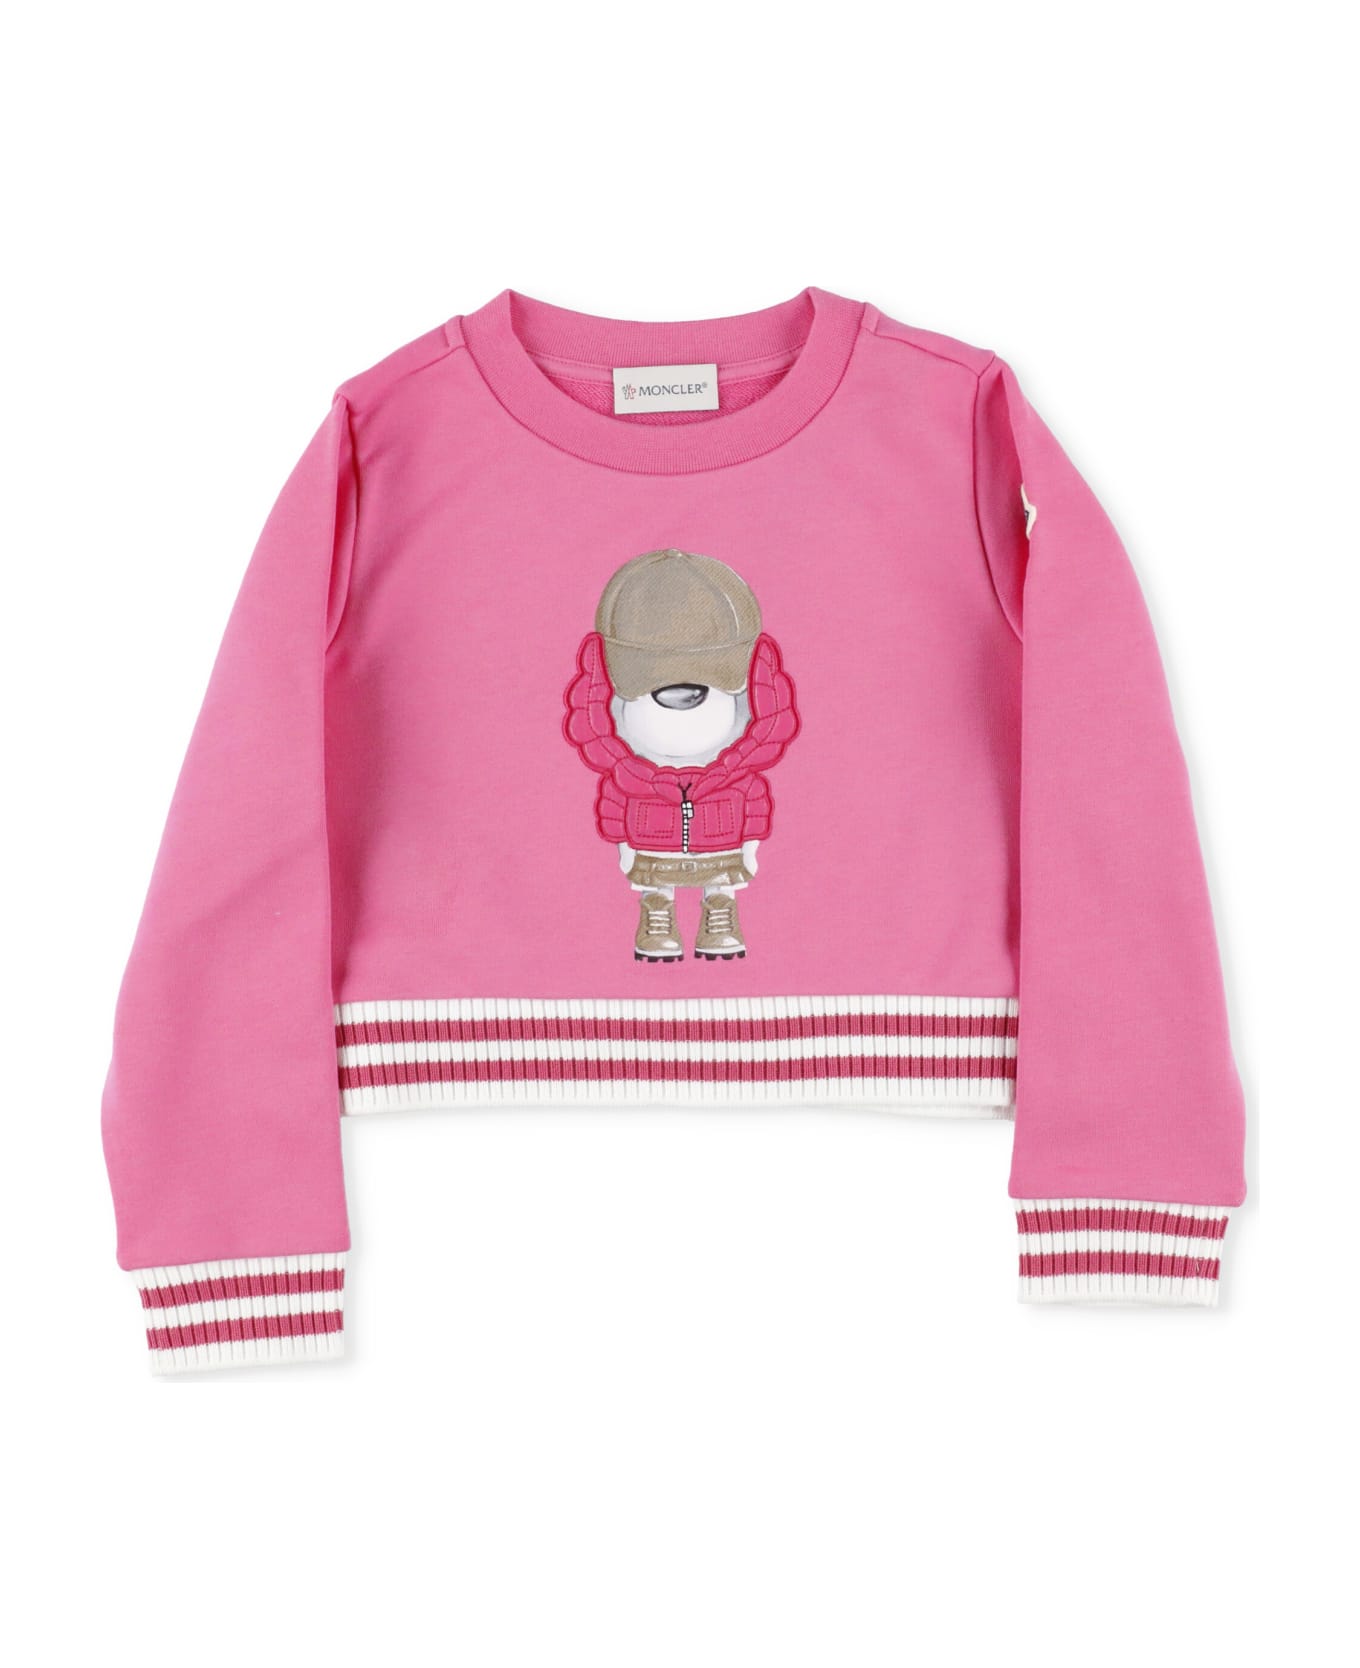 Moncler Sweatshirt With Print - Pink